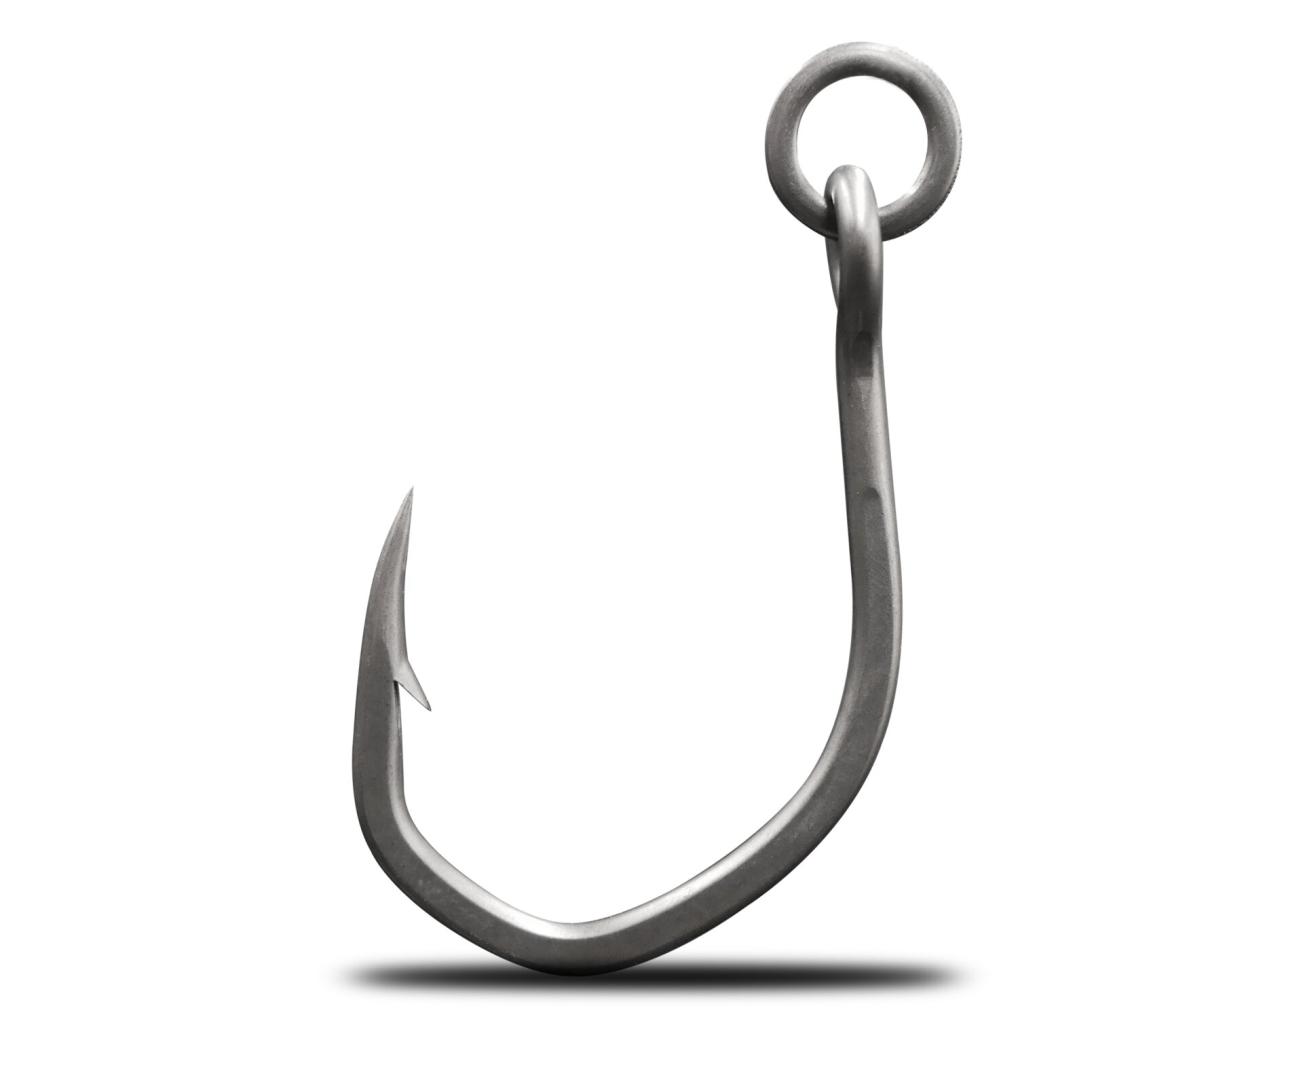 VMC Treble Small Fishing Hooks Strengthen Anchor Sharp 3X Strong Short Cut  Fishhook Spoon Lures For Artificial Bait Fishing 230629 From Nan09, $20.47